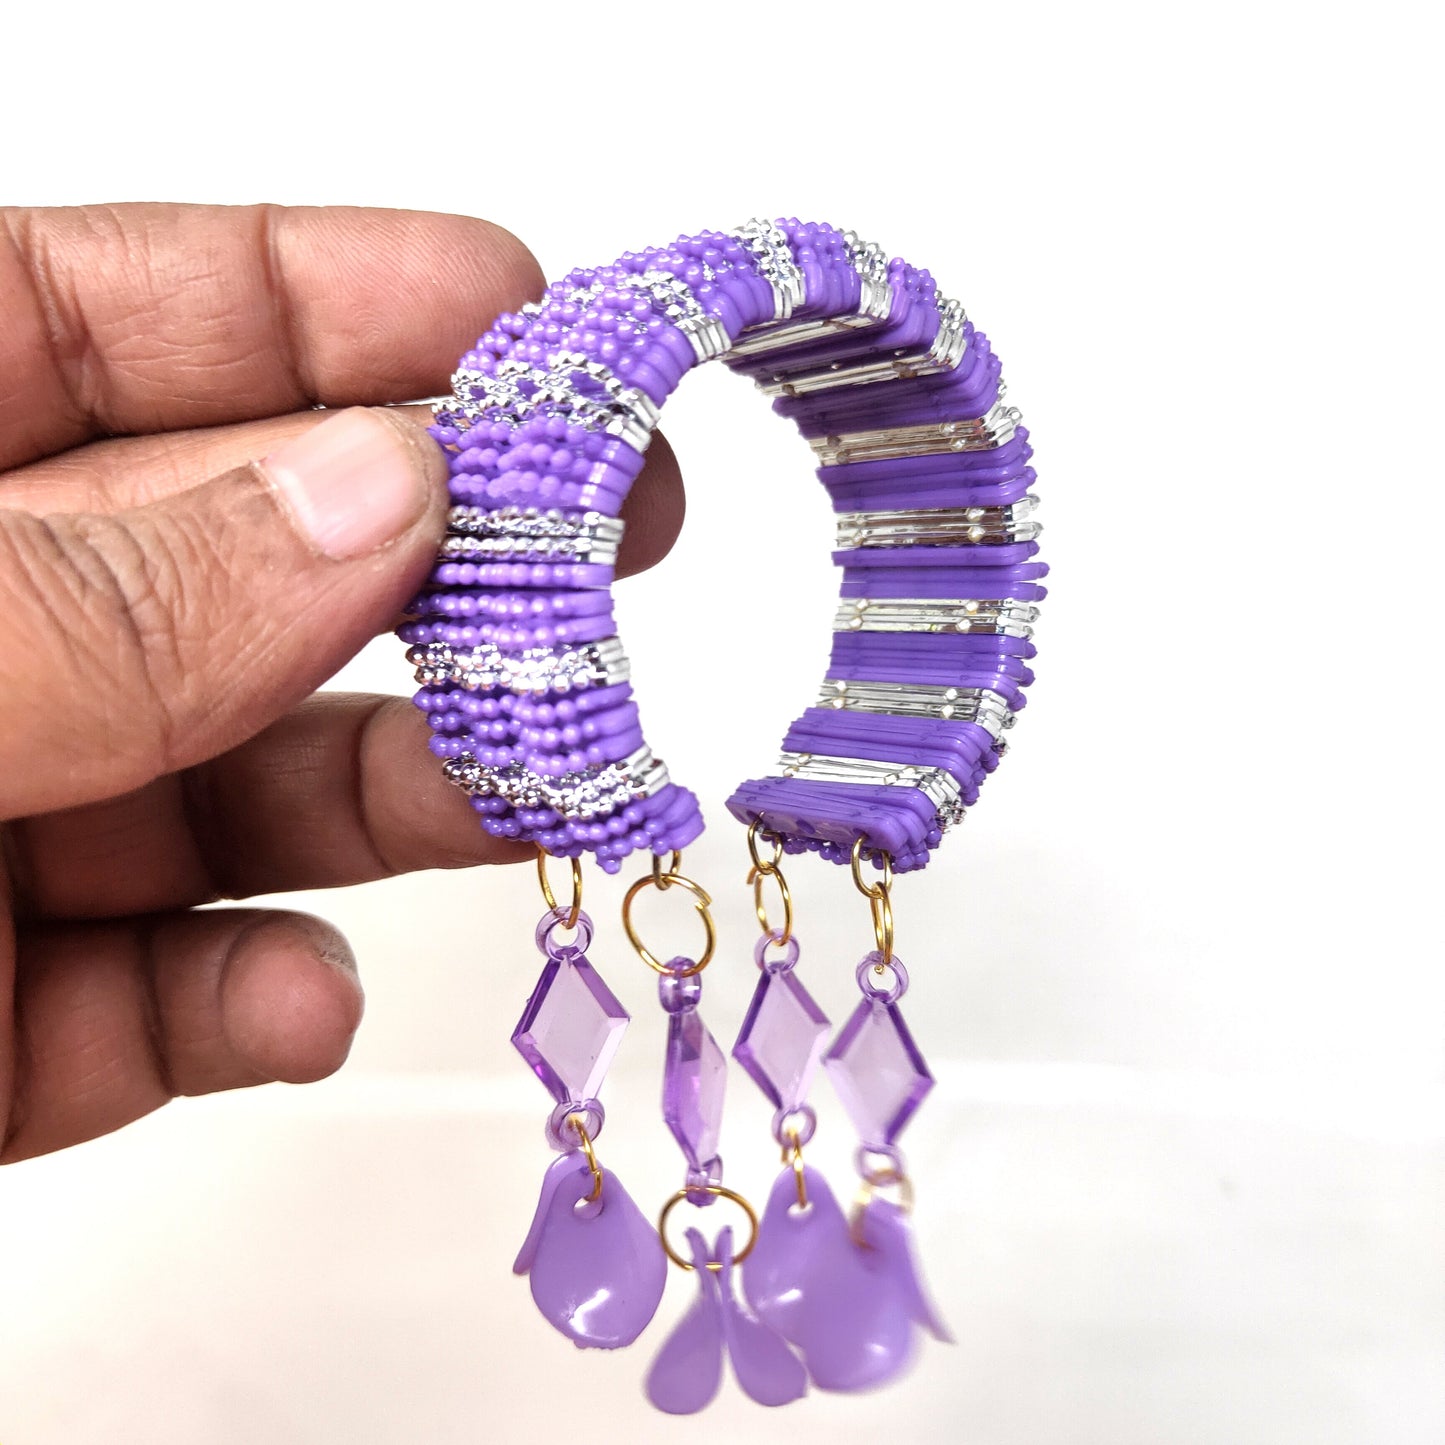 Anokhi Ada Plastic Beads Stylish Latkan Cuff Bangle Bracelet for Kids and Girls (AO-09 Bracelet)